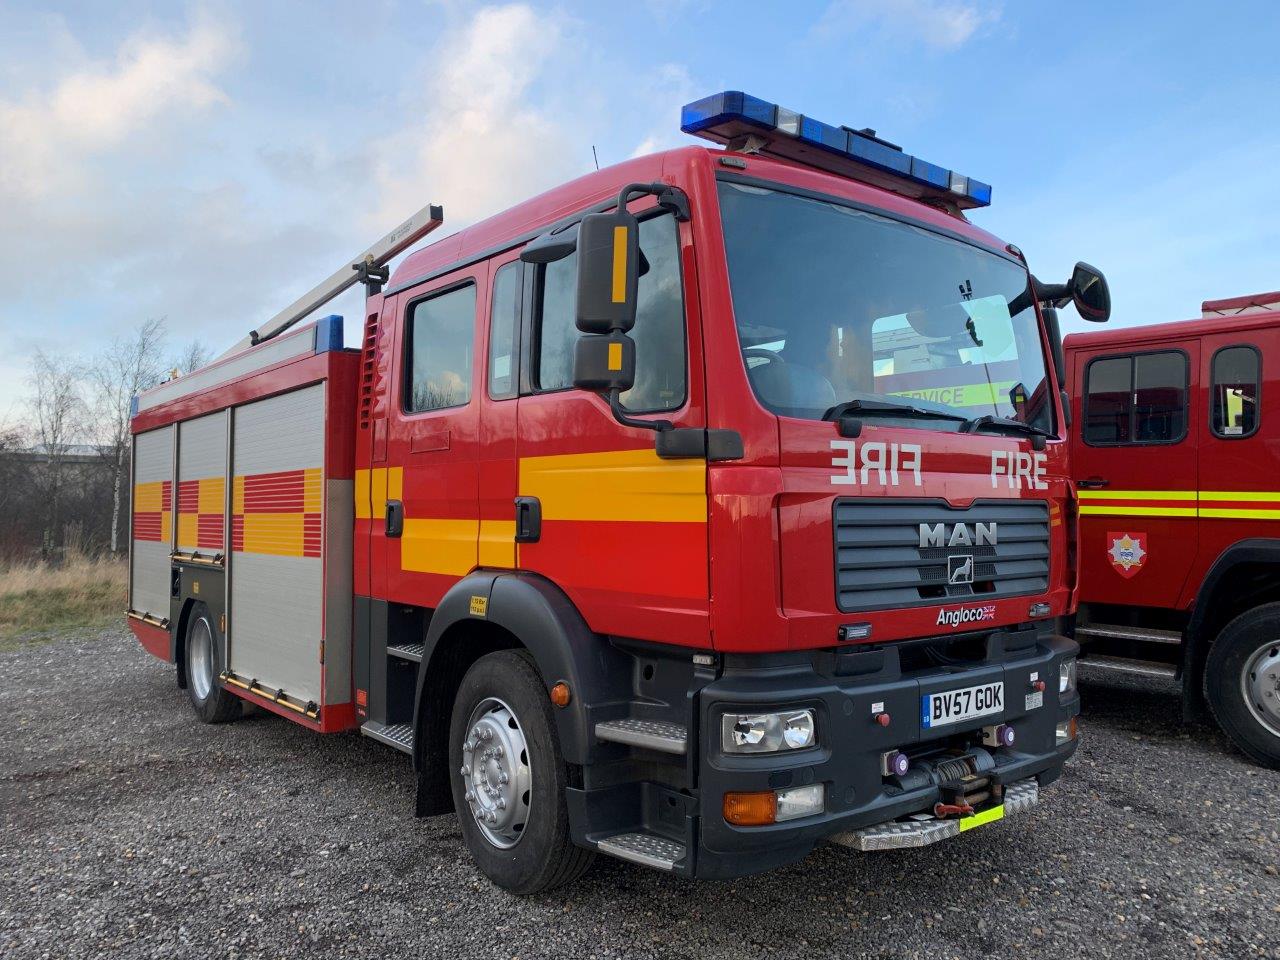 MAN TGM 18.240 WrL (Fire Engine) - ex military vehicles for sale, mod surplus